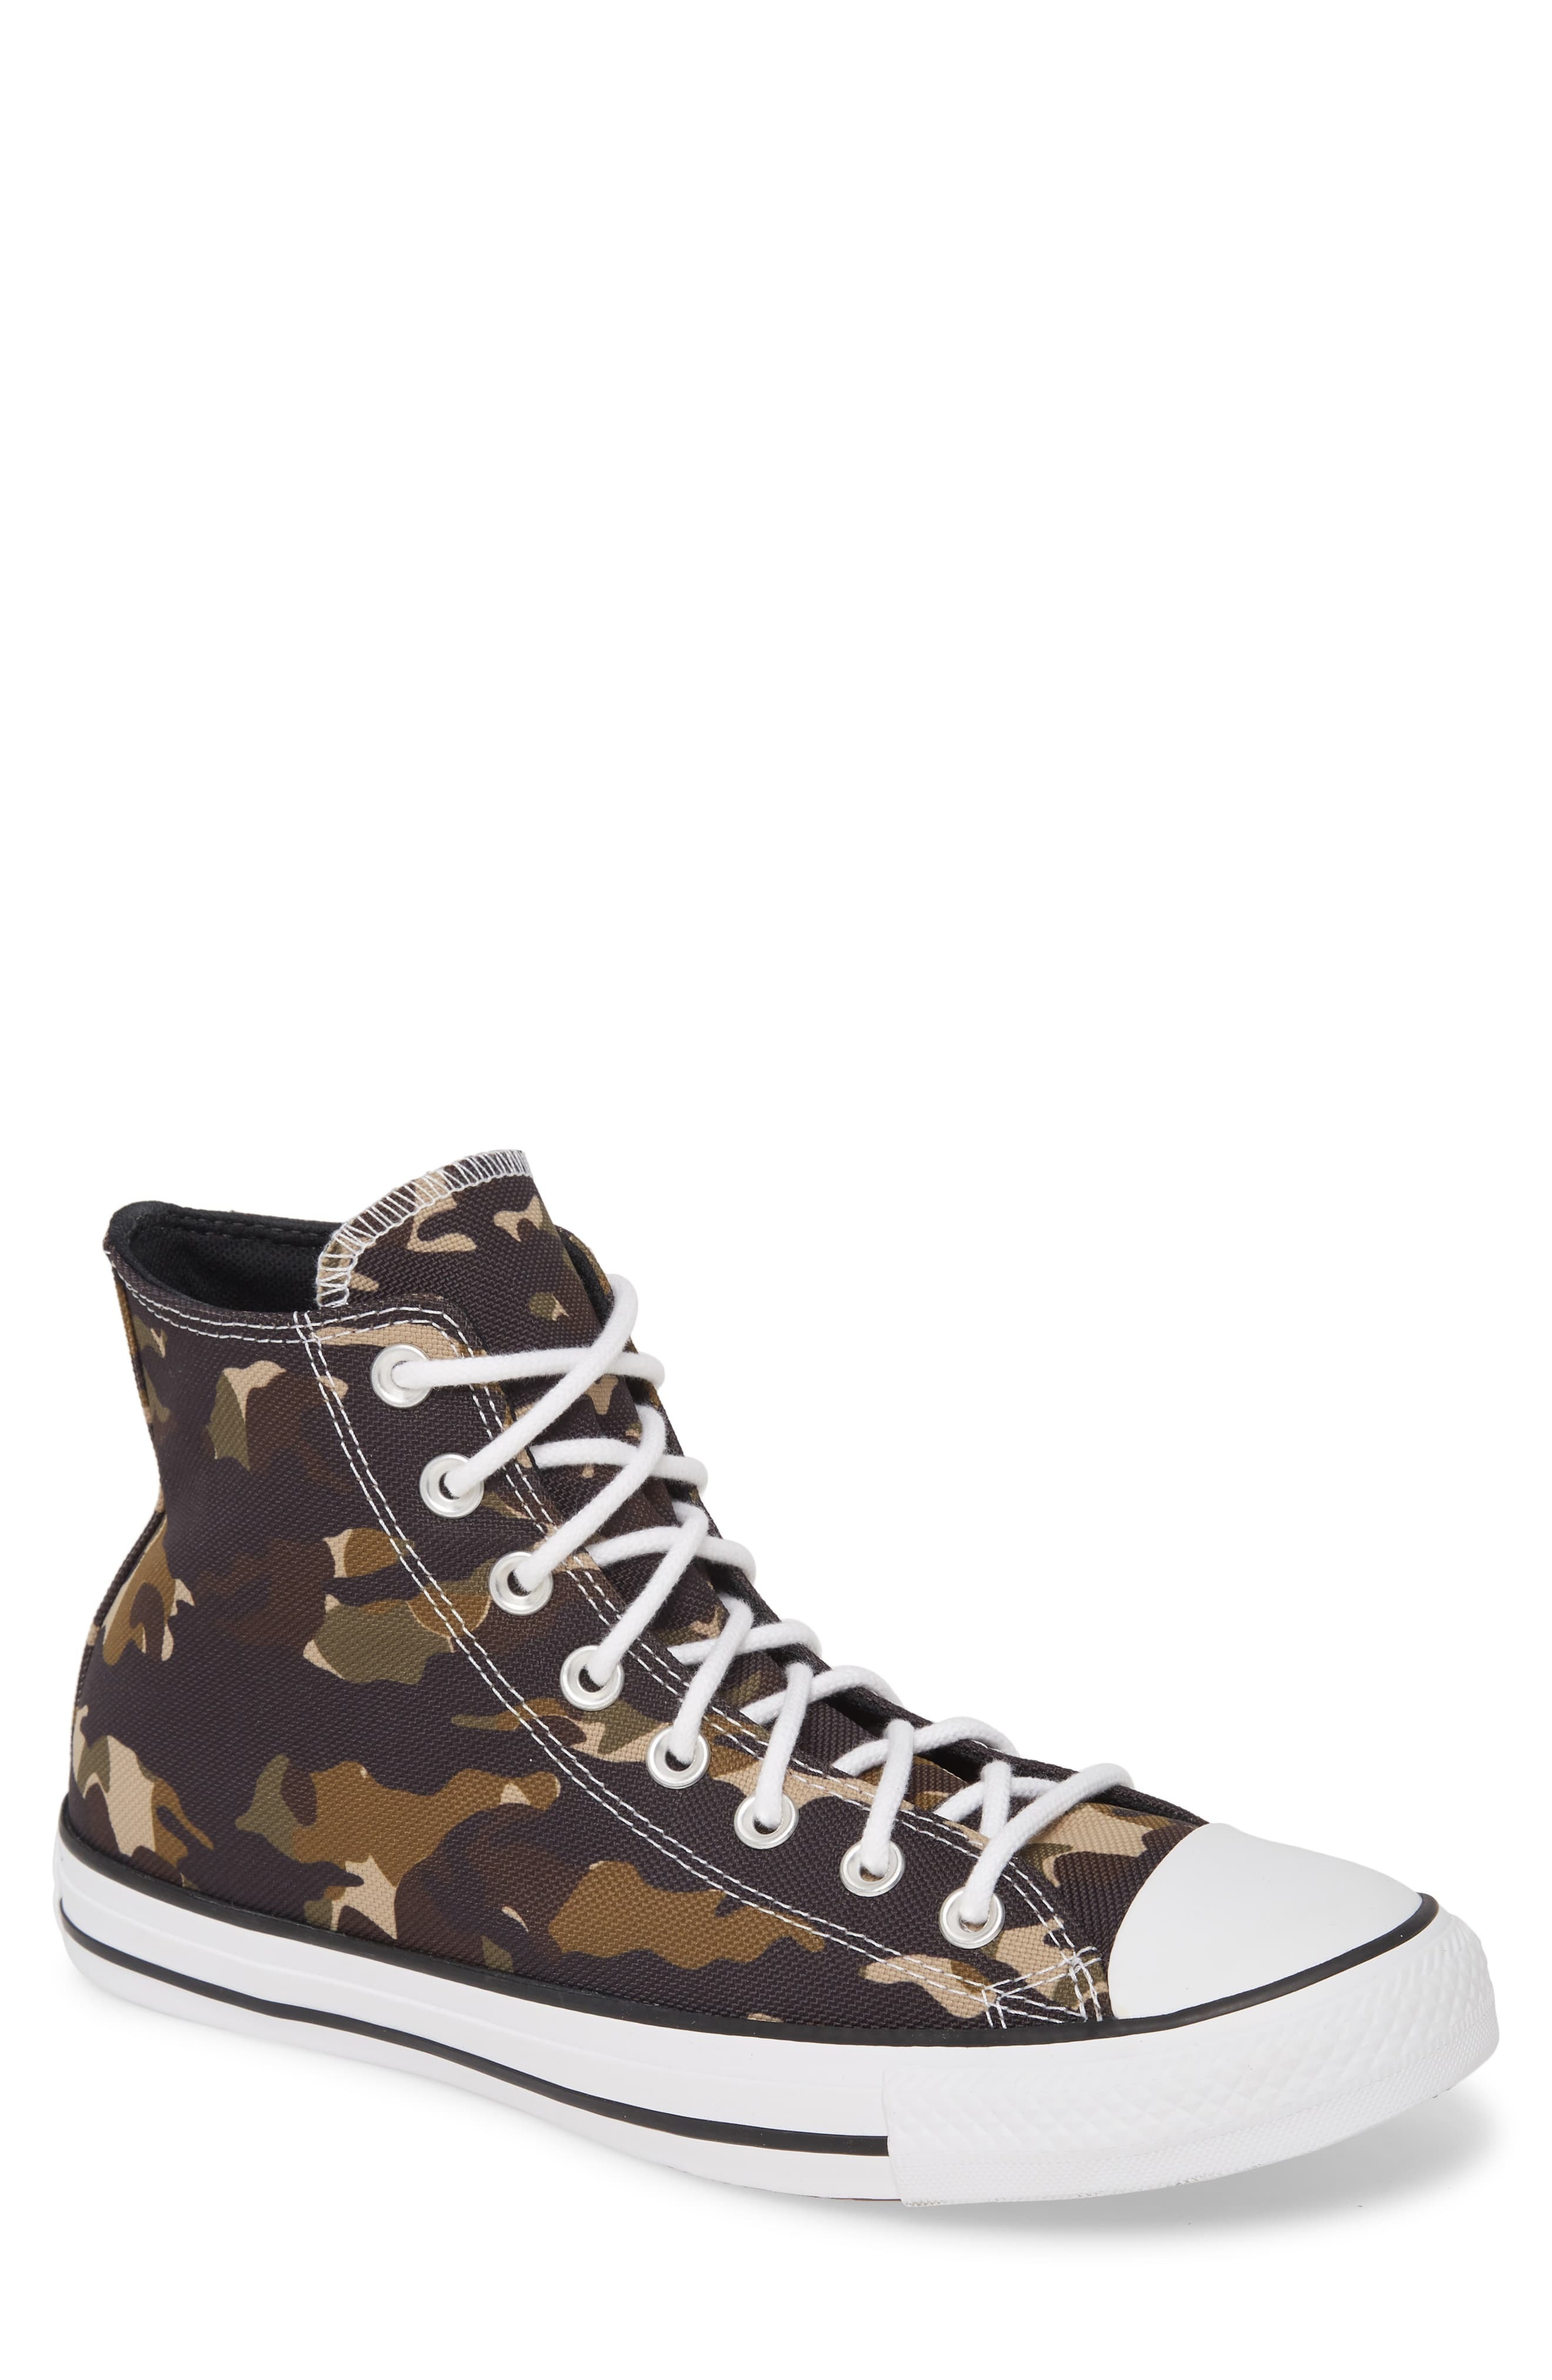 Converse Chuck Taylor Hi Sneaker, $40 | Nordstrom | Lookastic